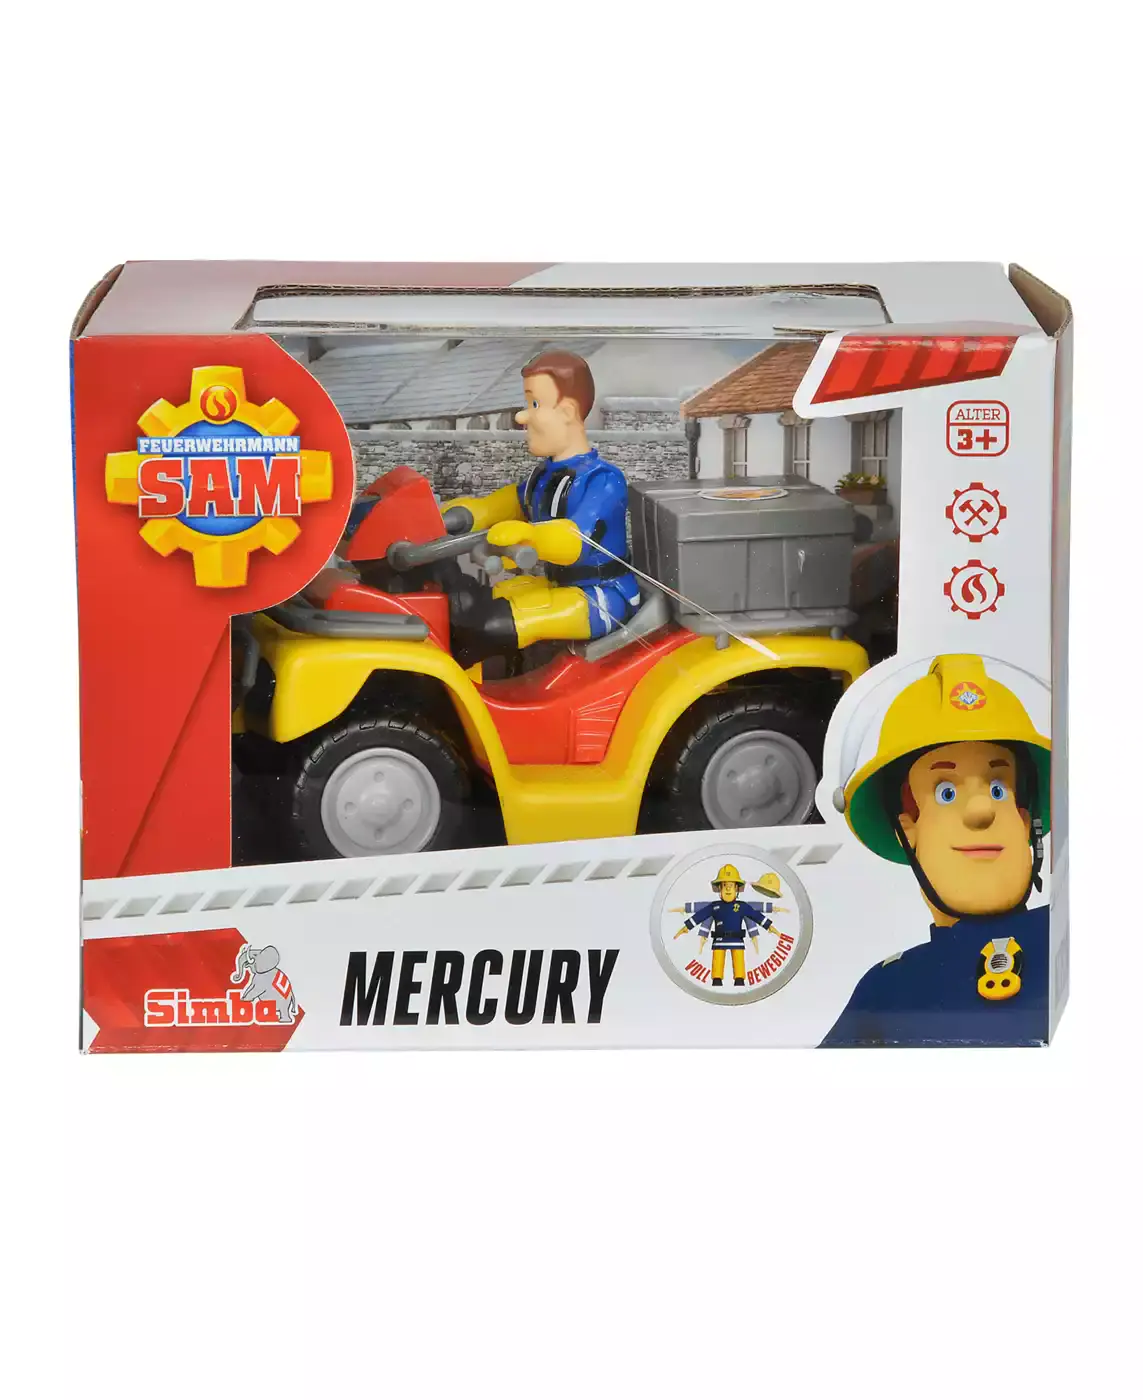 Mercury Quad Simba 2000568381700 8